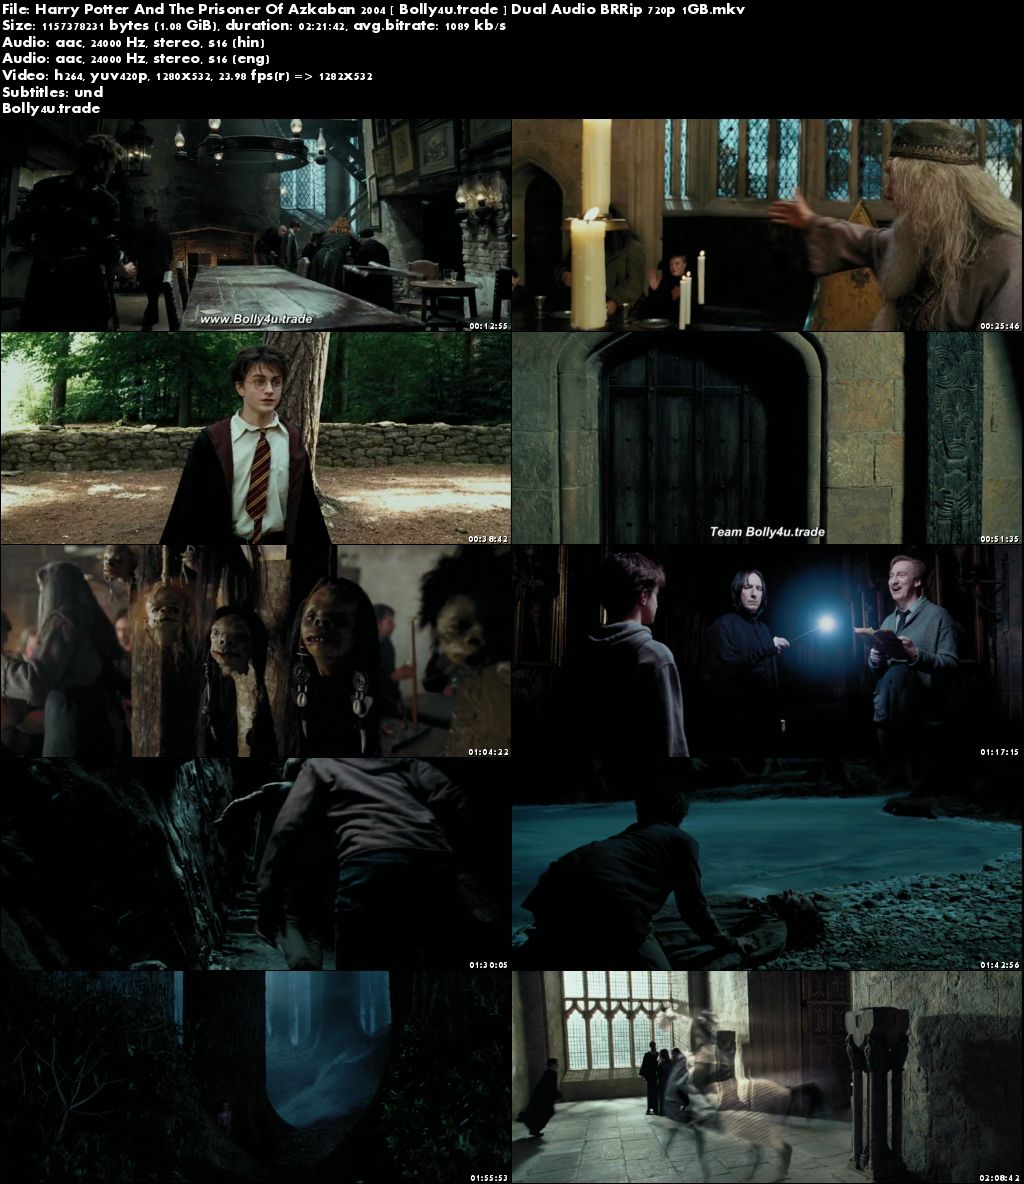 Harry Potter And The Prisoner Of Azkaban 2004 BRRip 1GB Hindi Dual Audio 720p Download